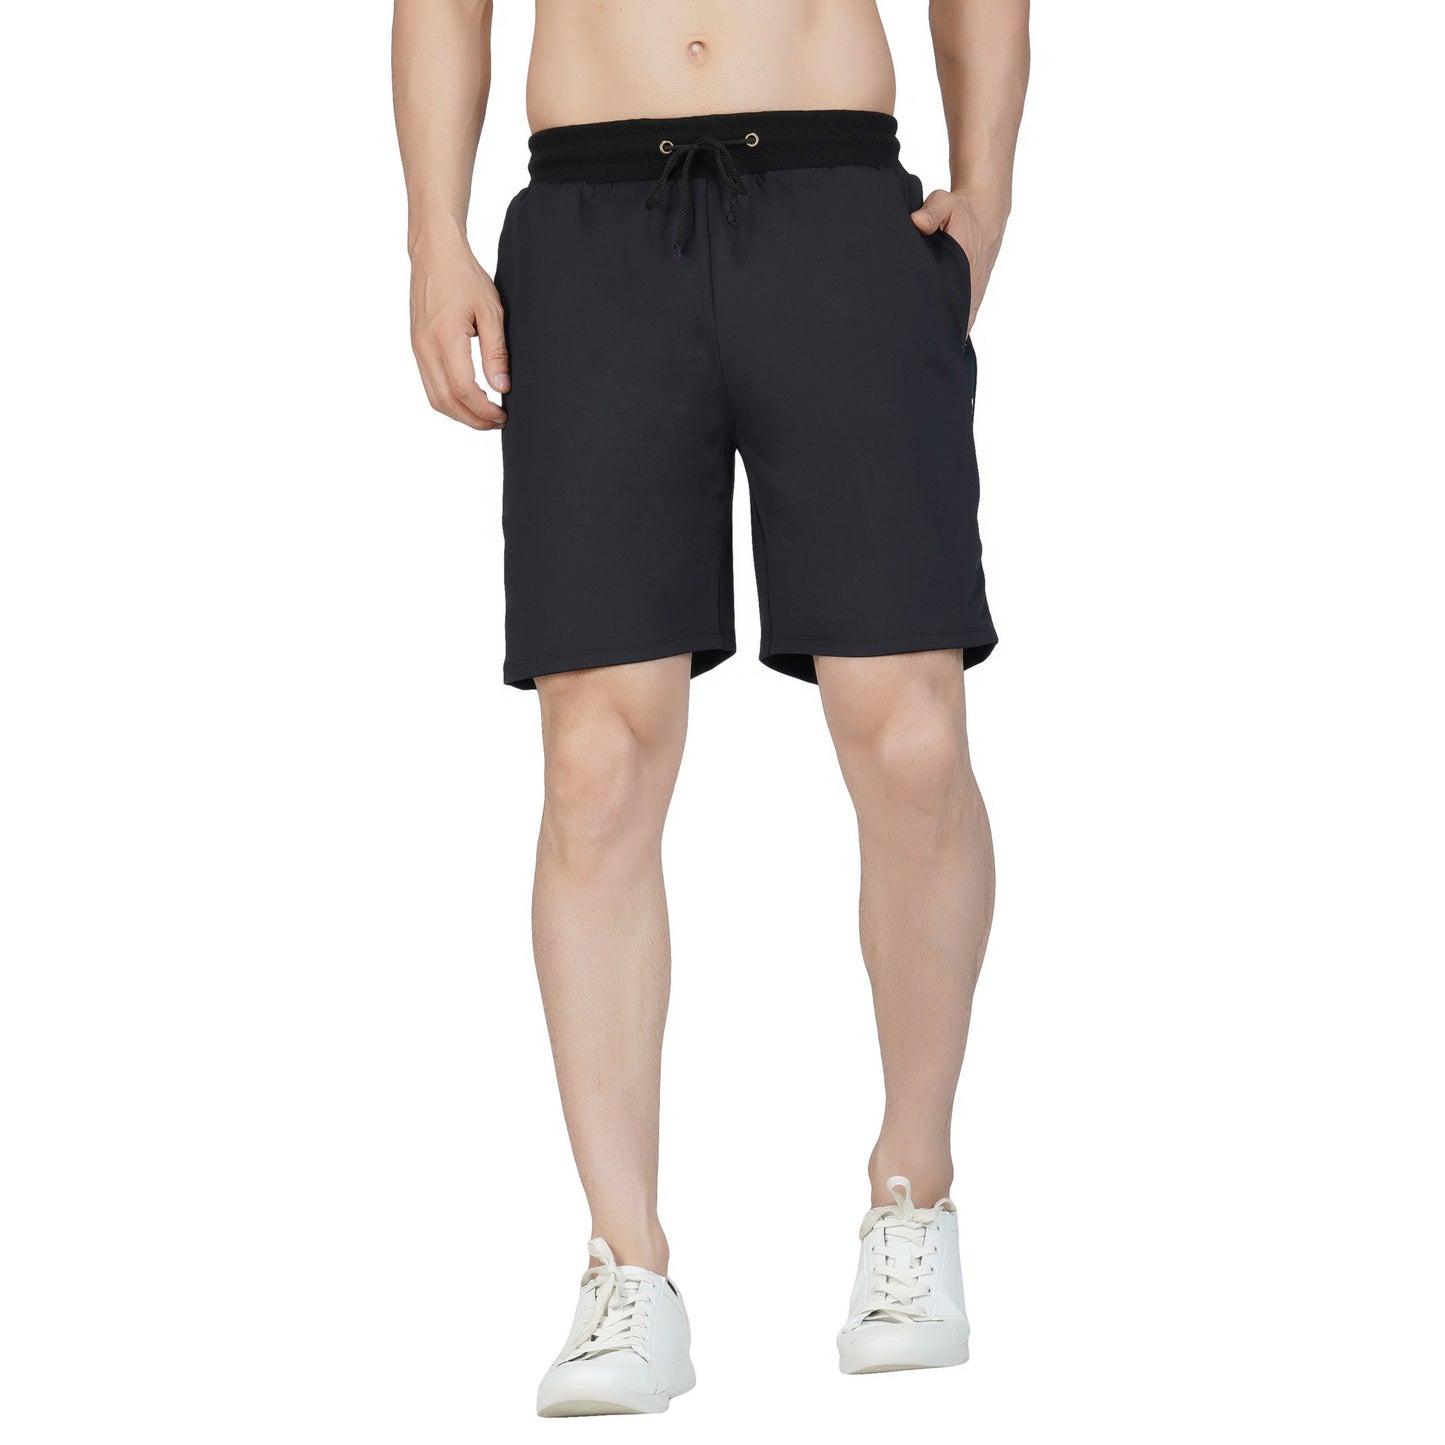 SLAY. Men's Activewear Black Gym Vest & Shorts Co-ord Set (4 way Stretch Fabric)